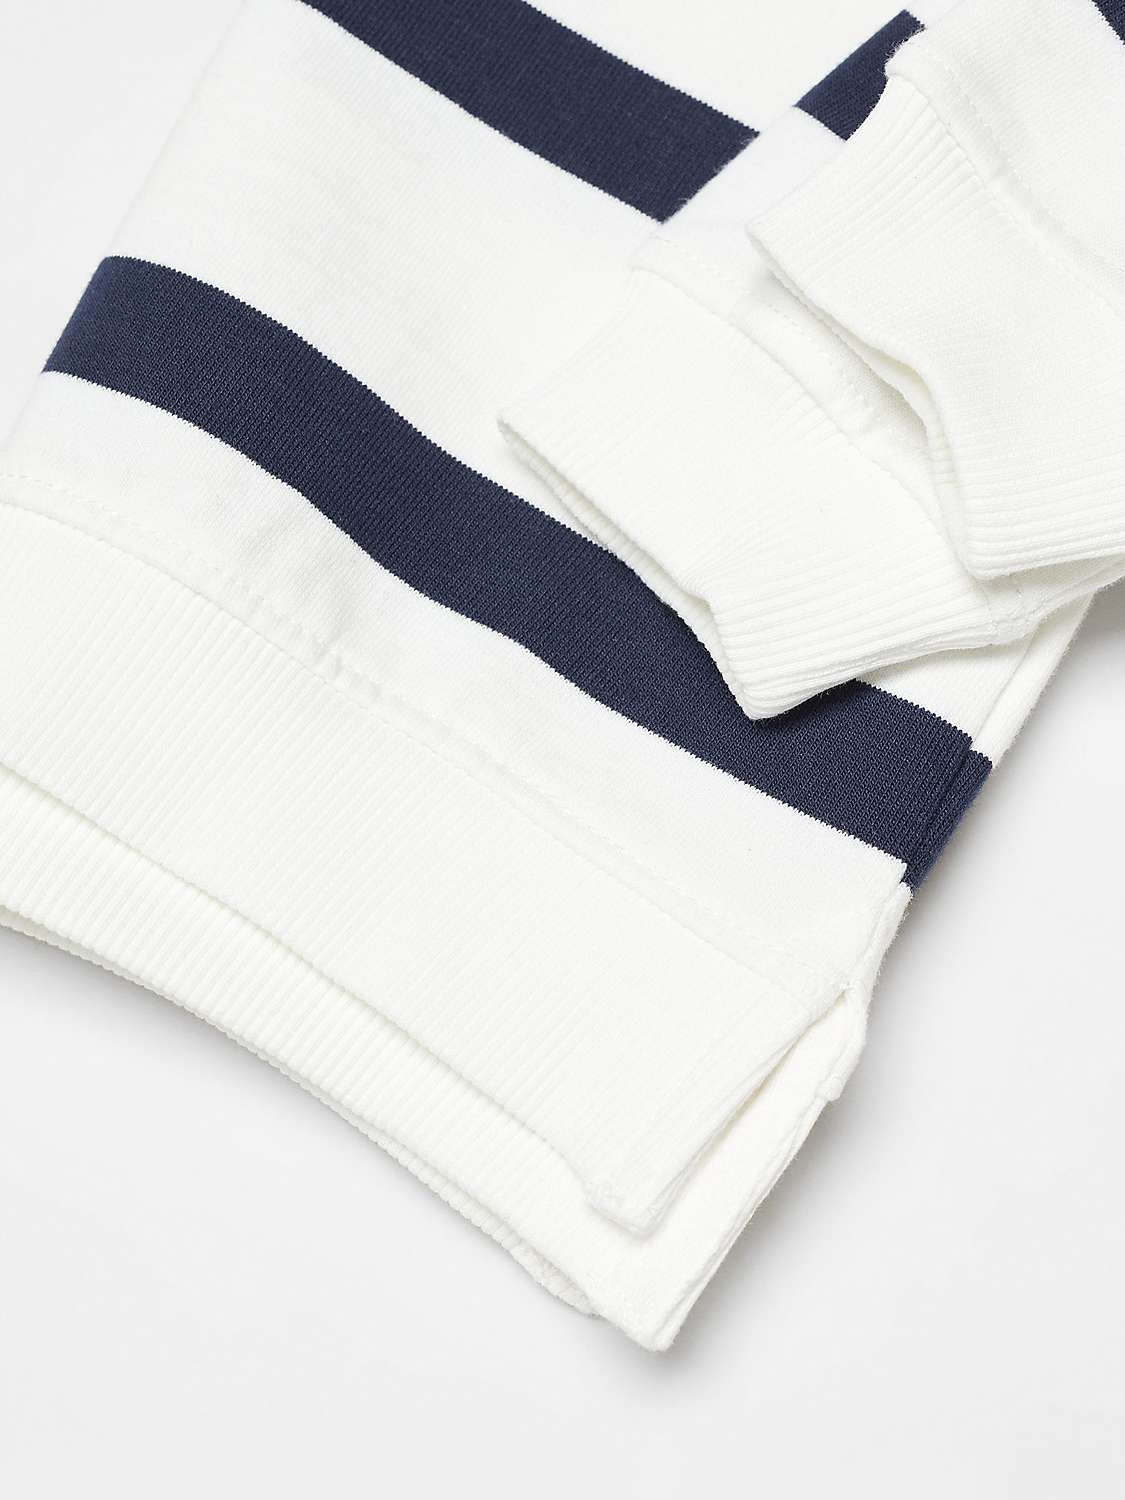 Buy Mango Baby Holiday Stripe Sweatshirt, Navy/White Online at johnlewis.com